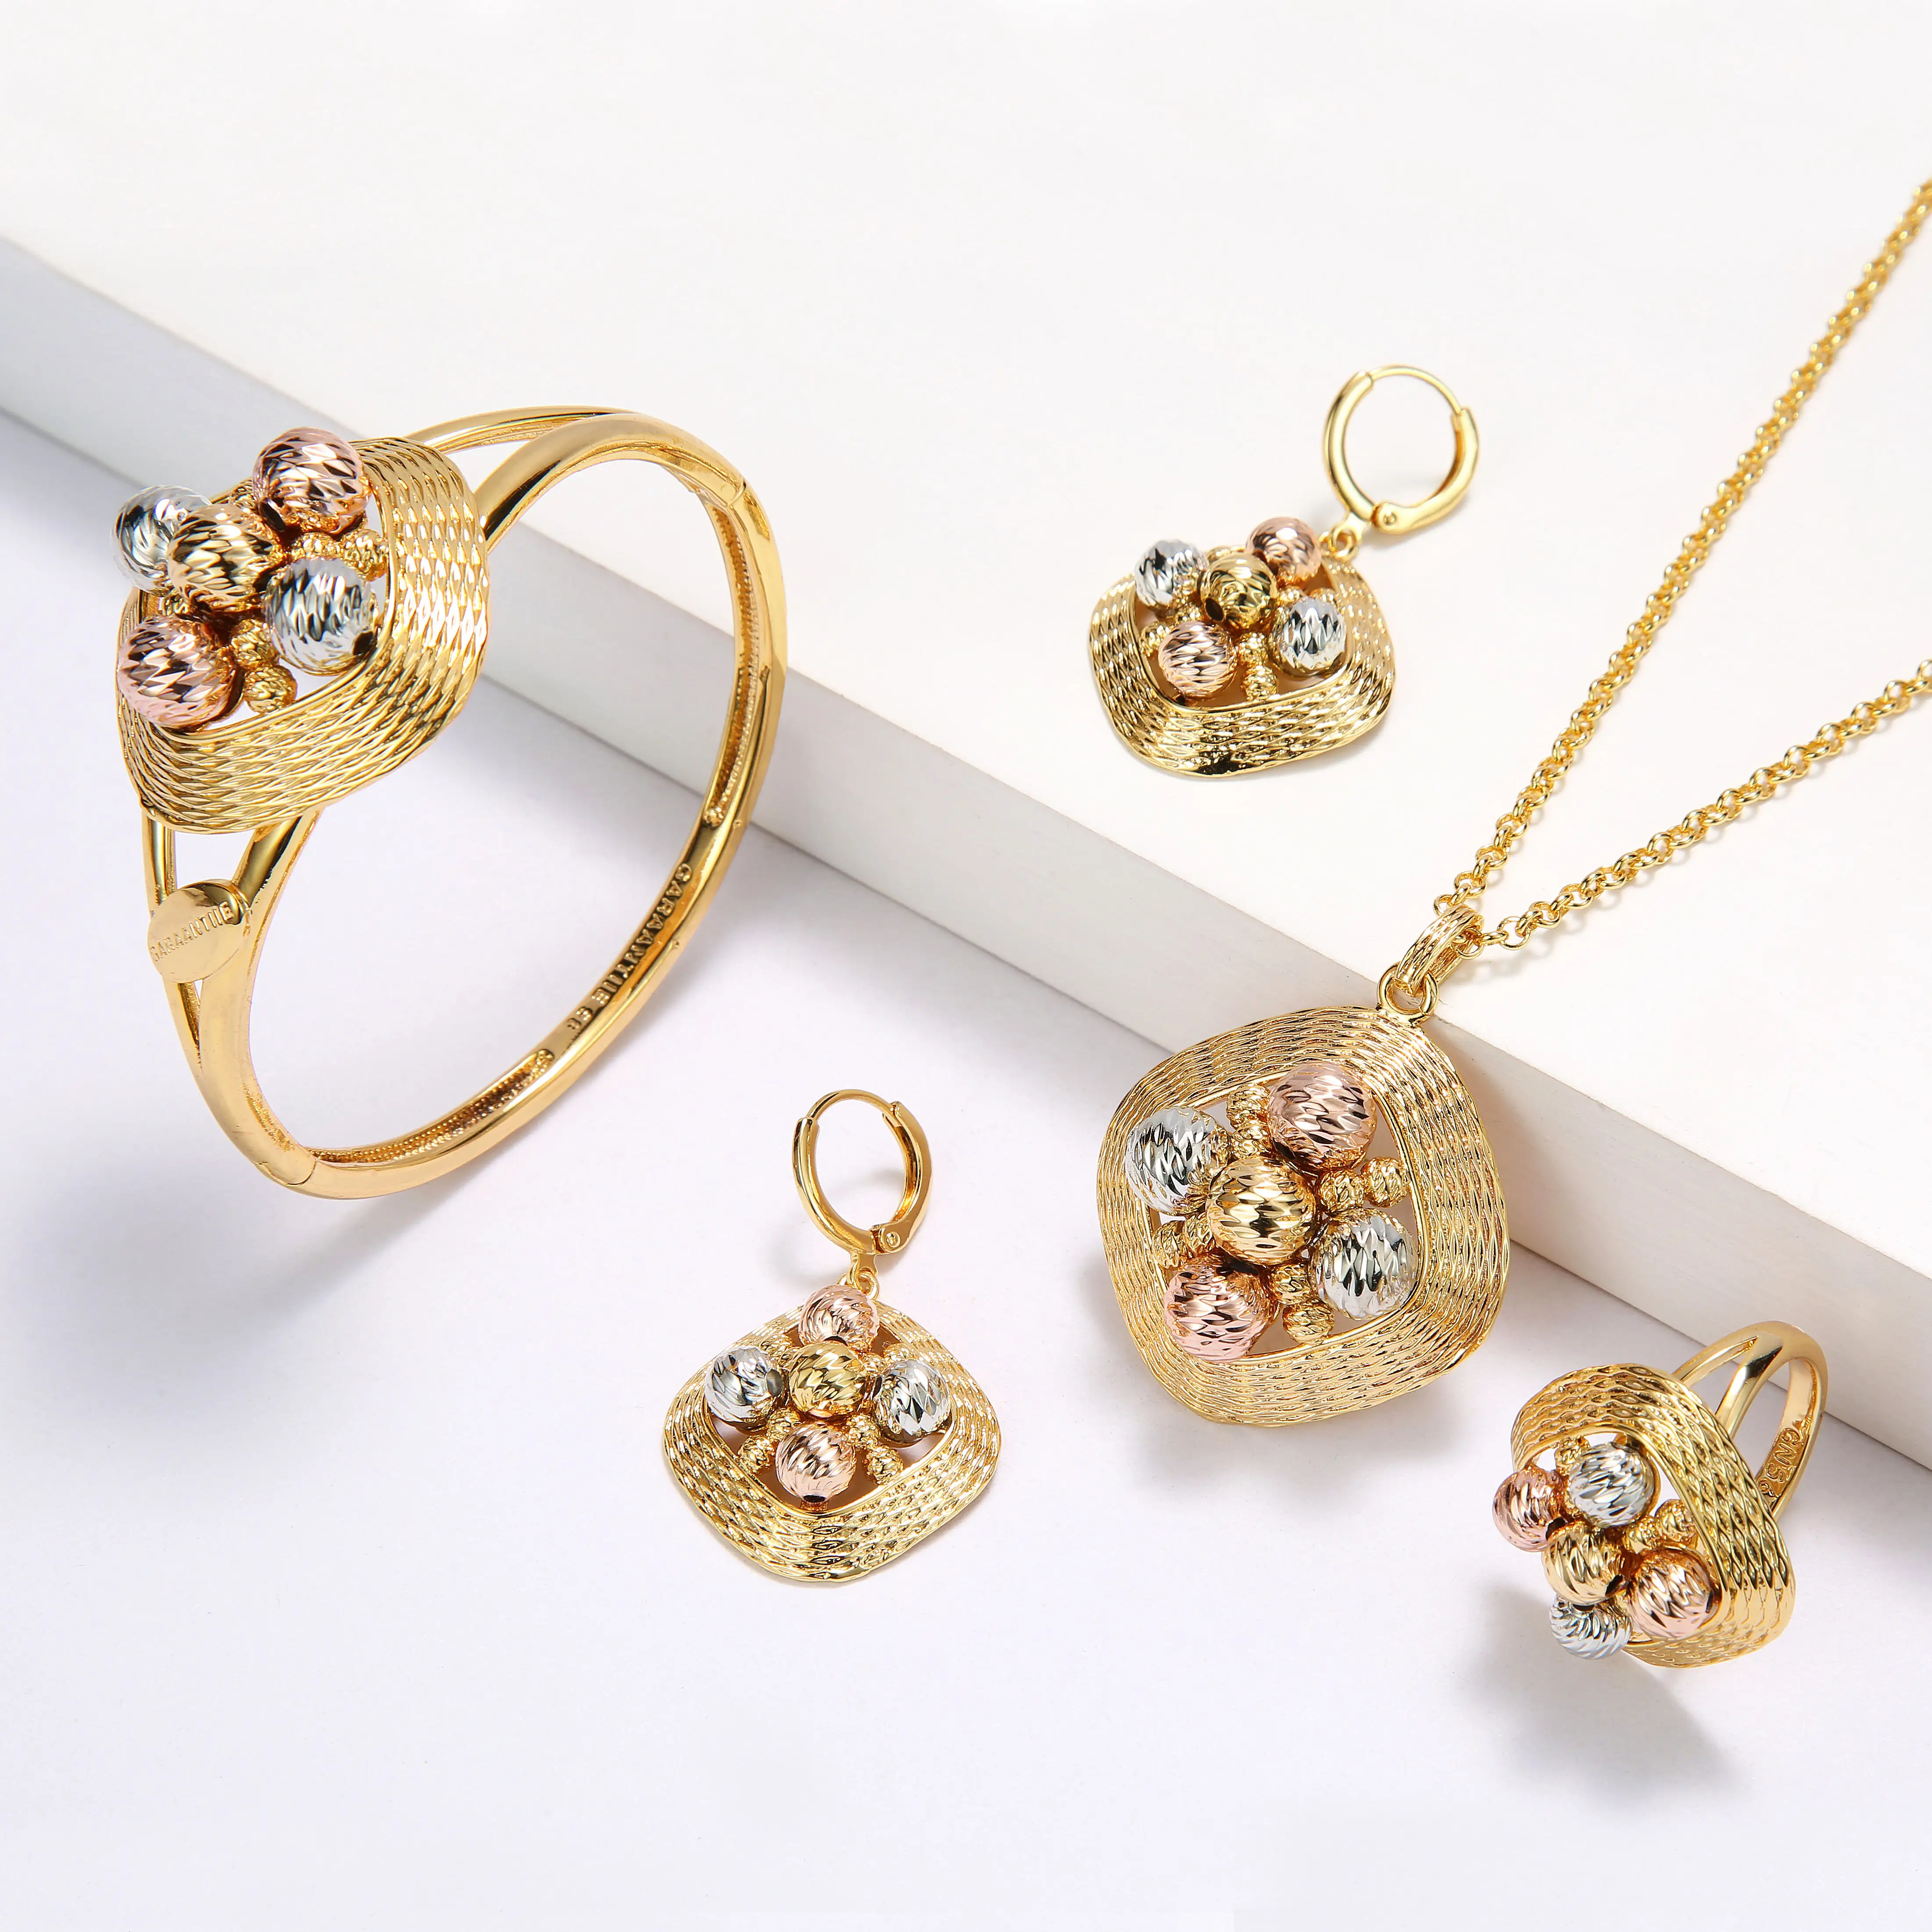 GARAANTIIE Fashion design Italy Brazil gold retro batch flower beads inlaid with 24K high quality jewelry set